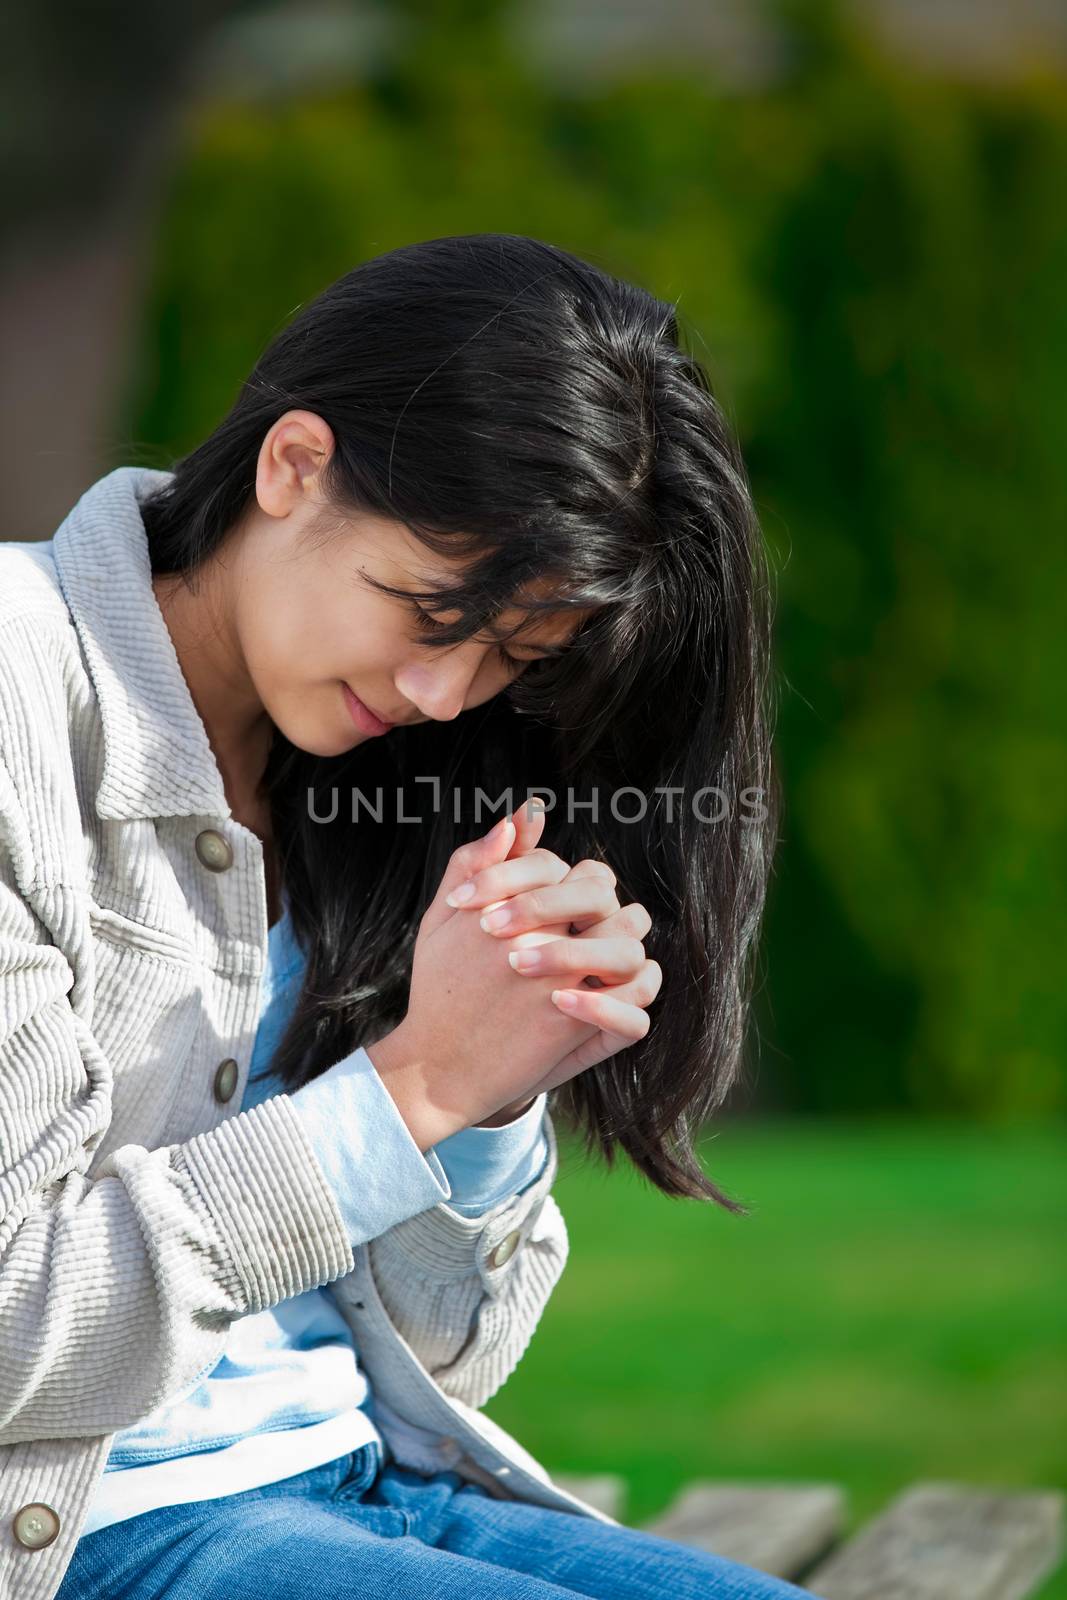 Young biracial teen girl praying outdoors on bench by jarenwicklund